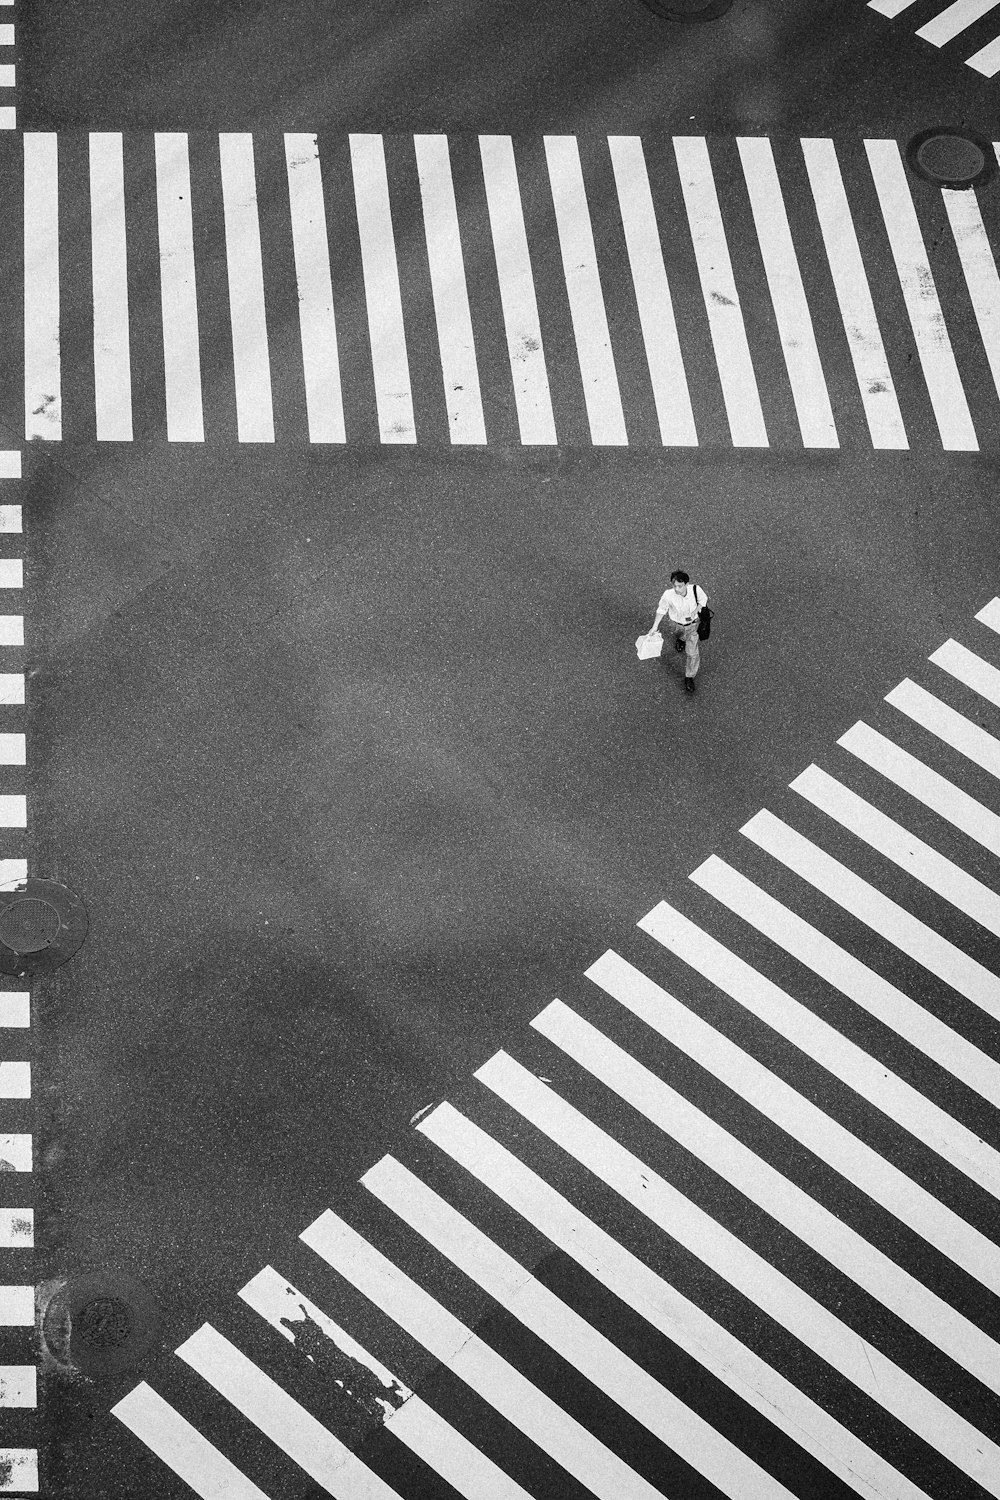 man walking at the center of crisscrossing pedestrian lanes